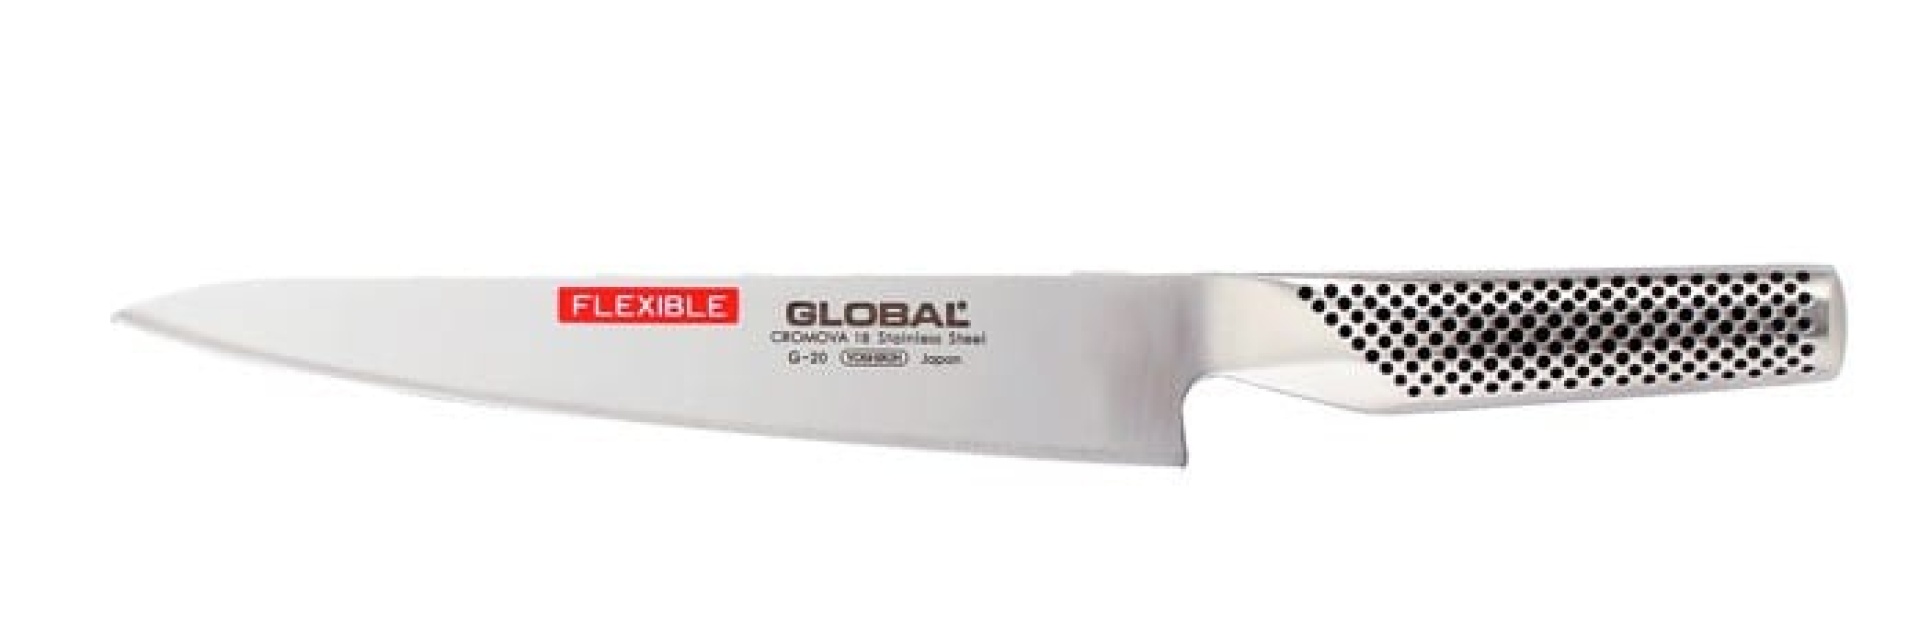 Global G-20 Bred filetkniv, 21 cm, fleksibel